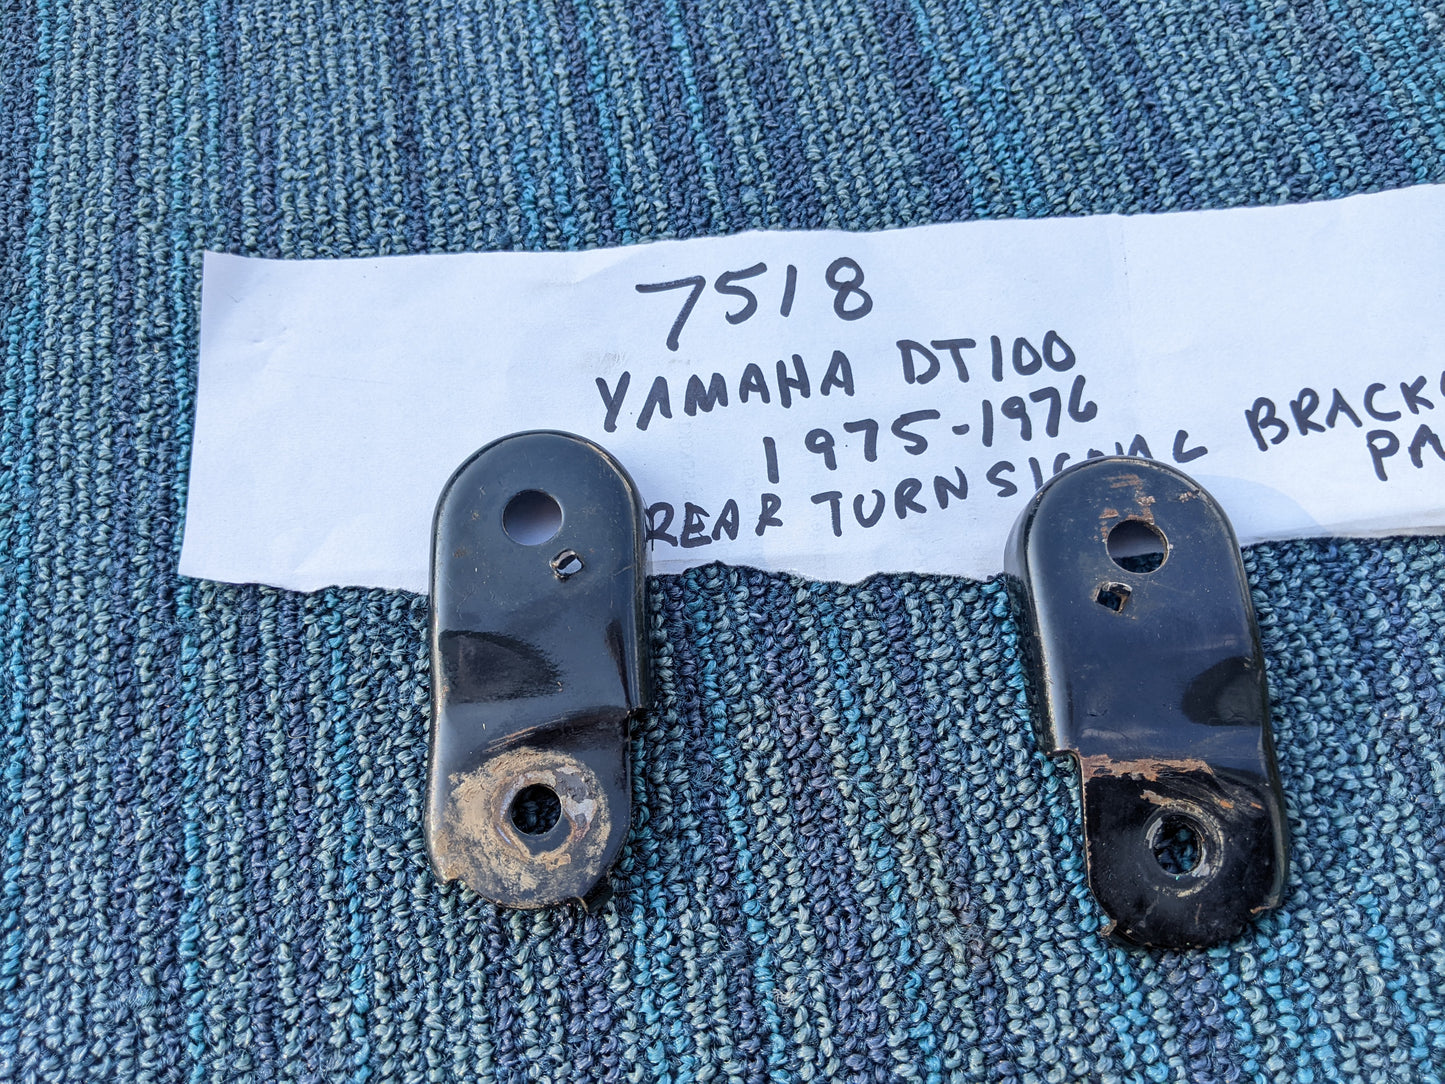 Sold Ebay Yamaha DT100 1975 Rear turn signal bracket pair sku 7518